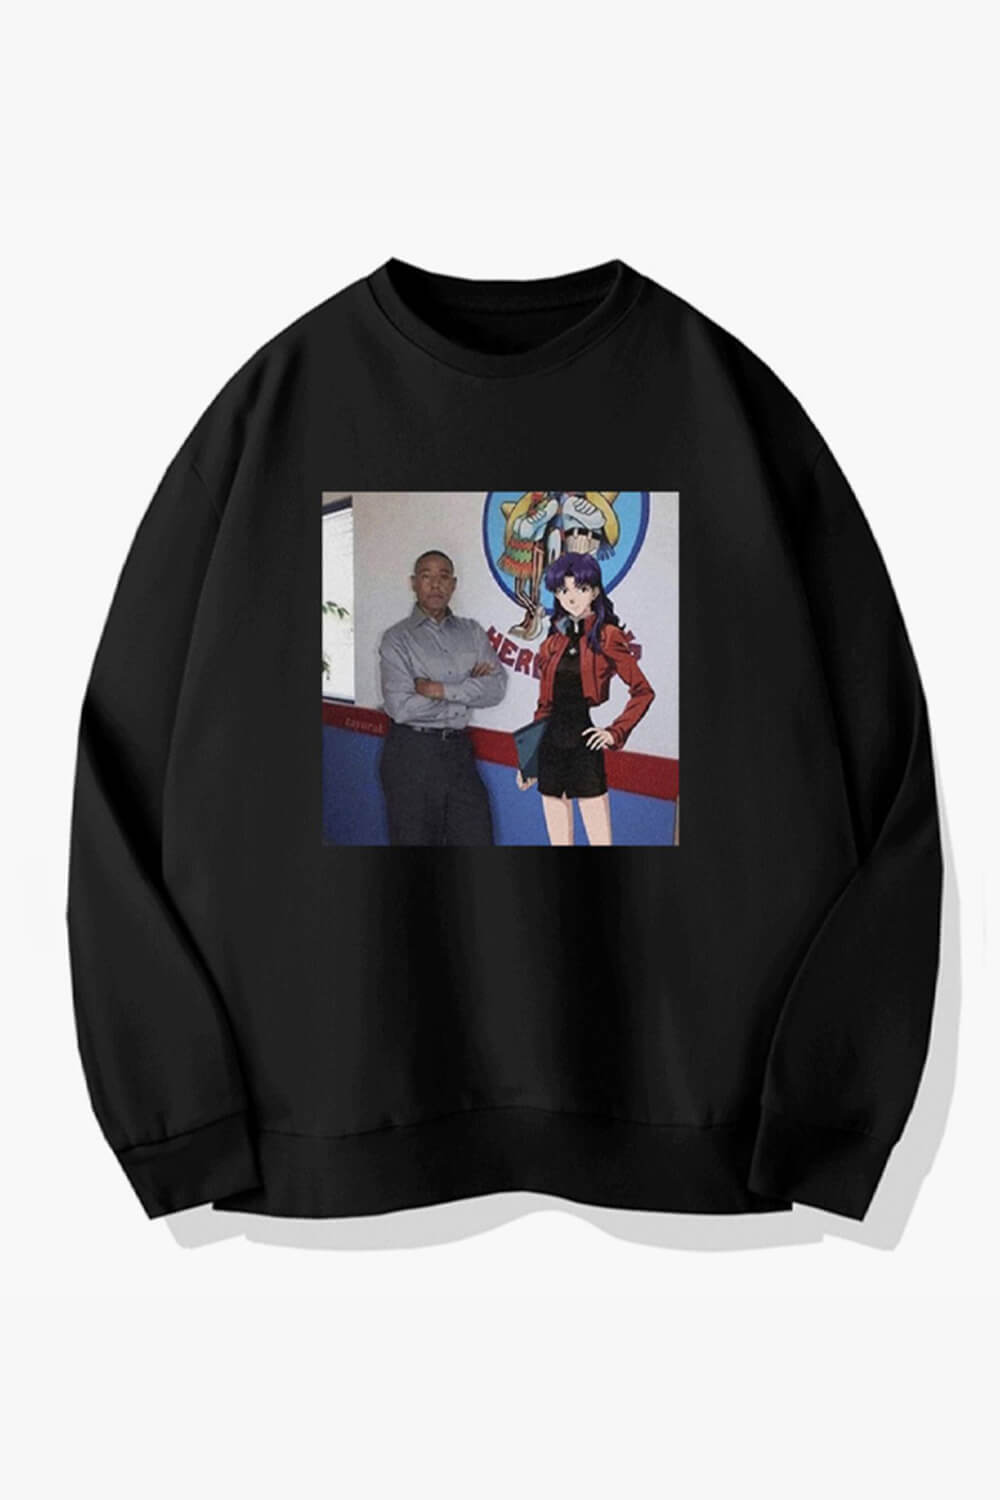 Gus Fring and Misato Katsuragi Sweatshirt Breaking Bad